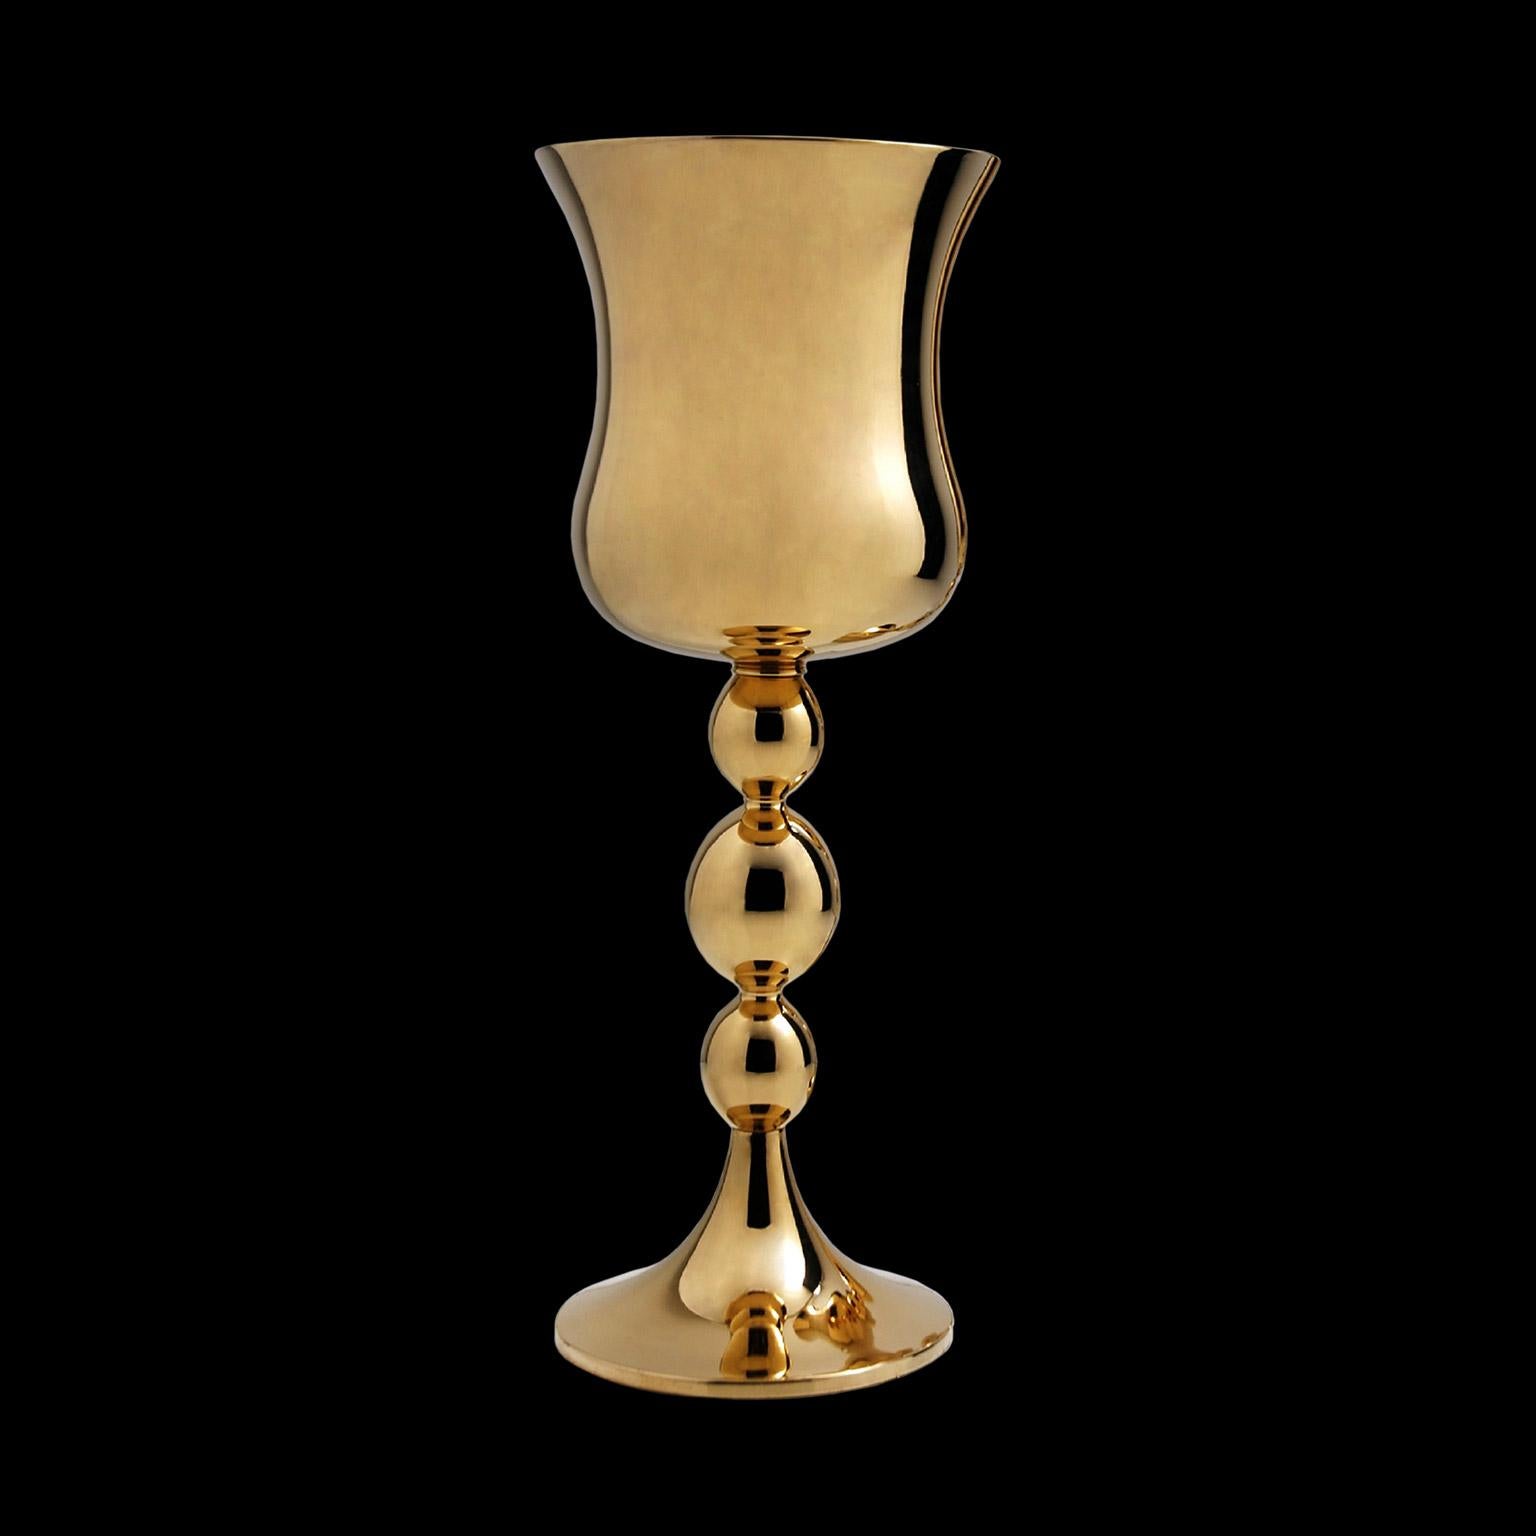 Ceramic vase KIM fully handcrafted in 24-karat gold

cod. CP007
Measures: H. 90.0 cm. - Dm. 35.0 cm.